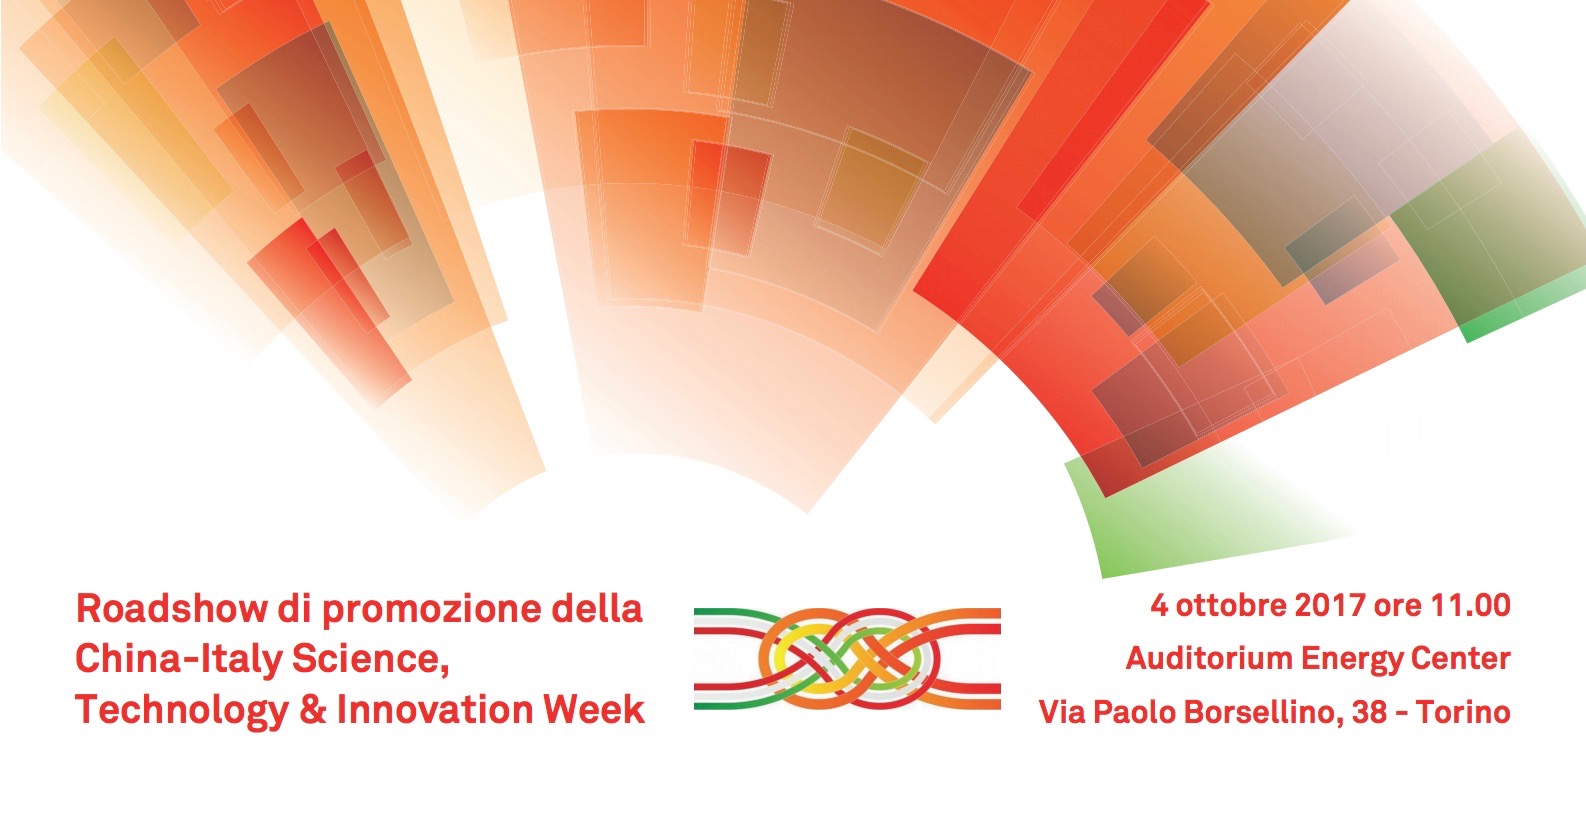 China-Italy Science, Technology & Innovation Week: il 4 ottobre a Torino il roadshow illustrativo